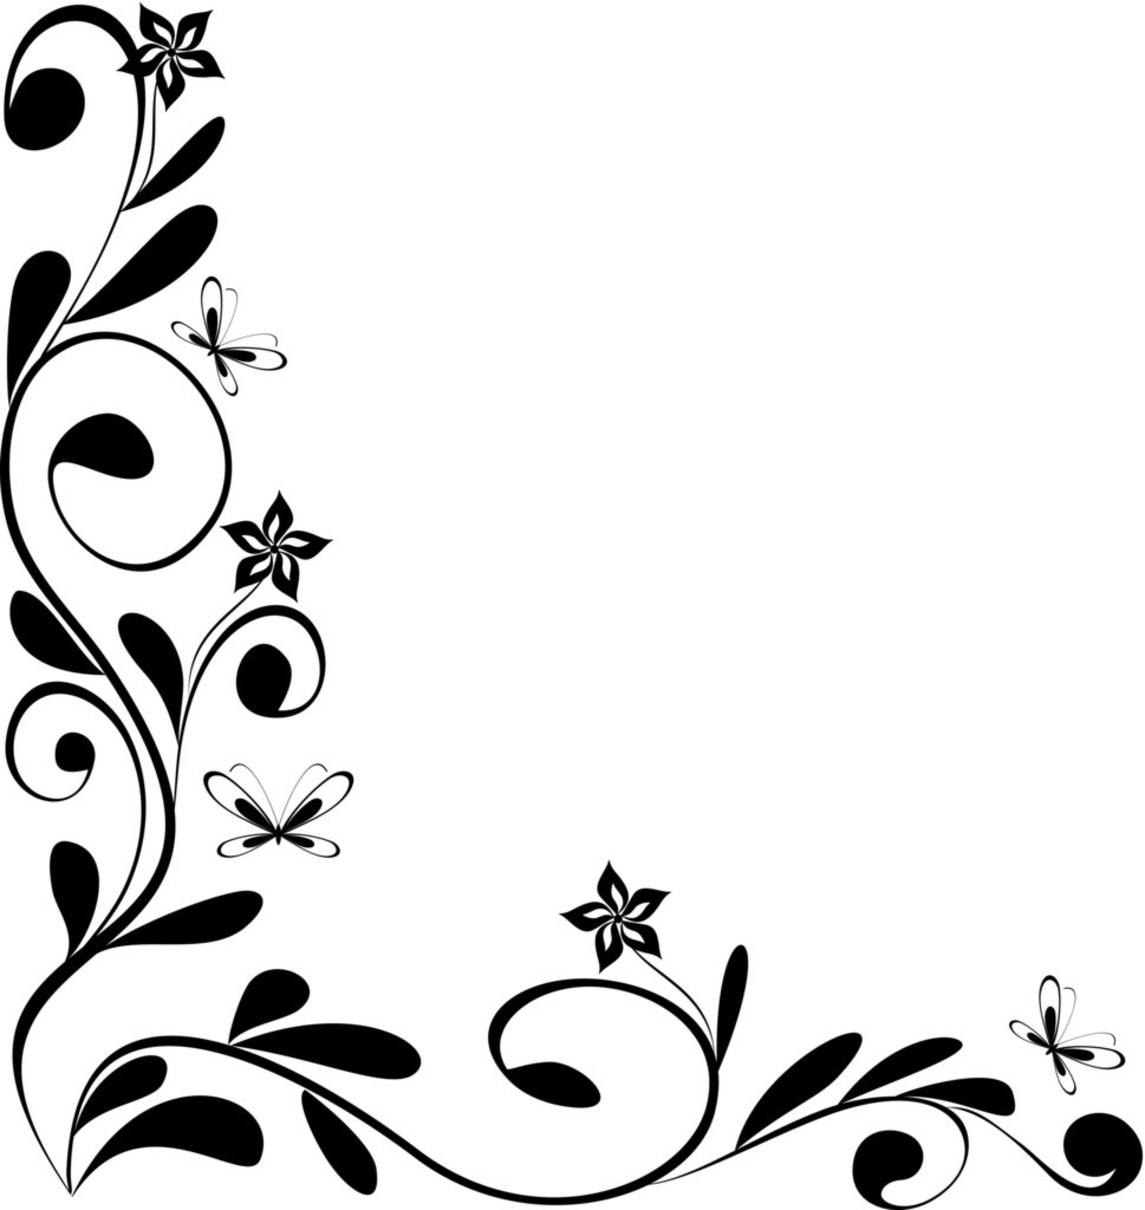 Black and white flower border clipart - ClipartFox